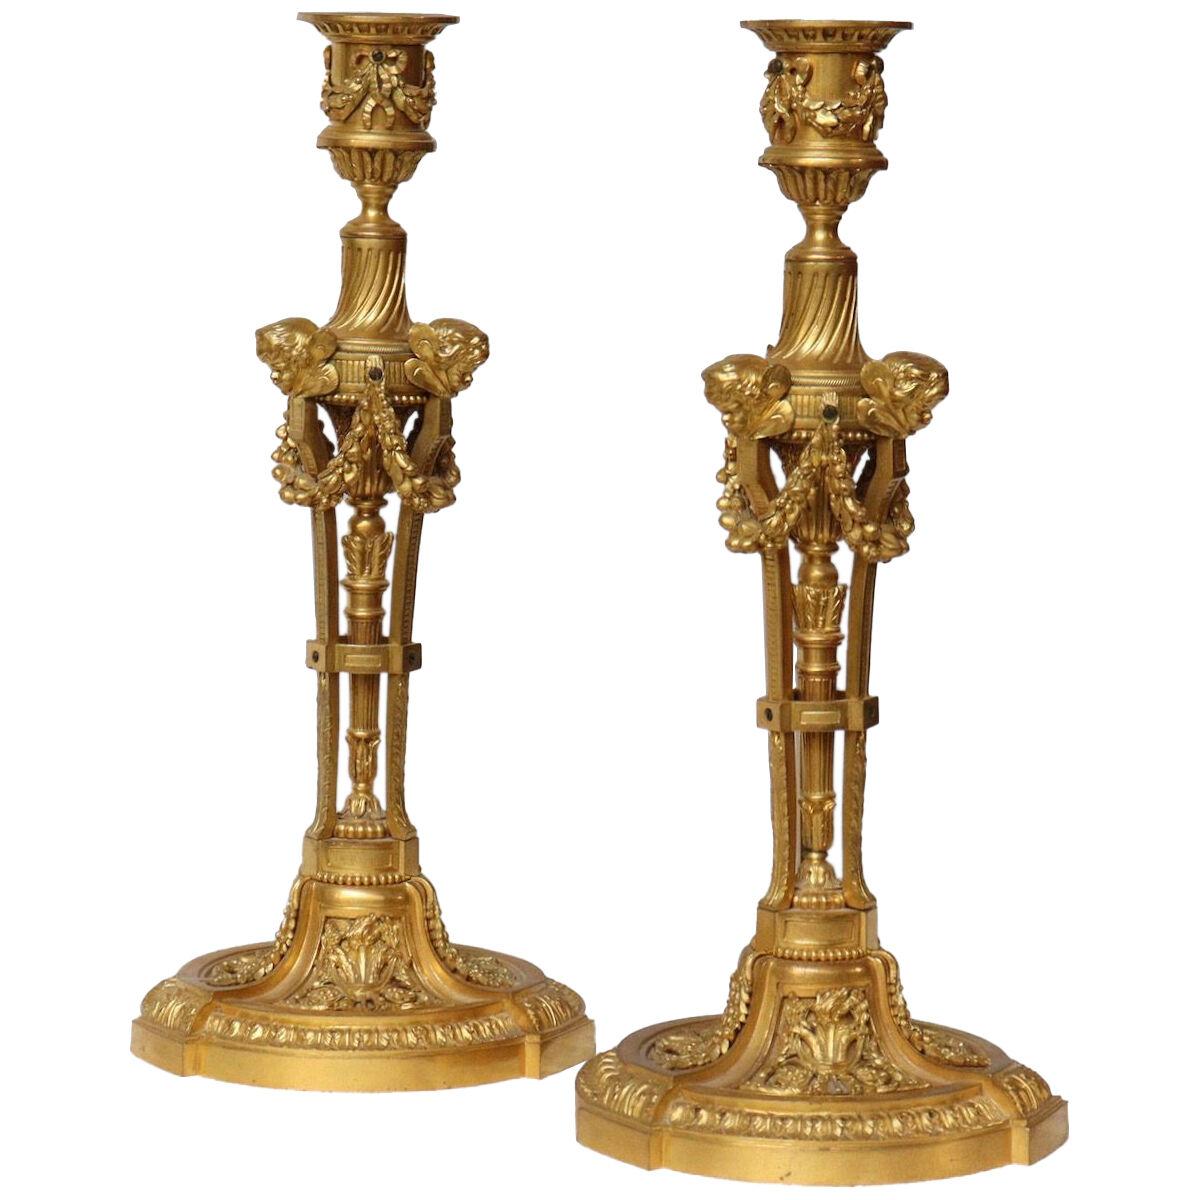 A Pair of French 19th Century Louis XVI Style Ormolu Candlesticks